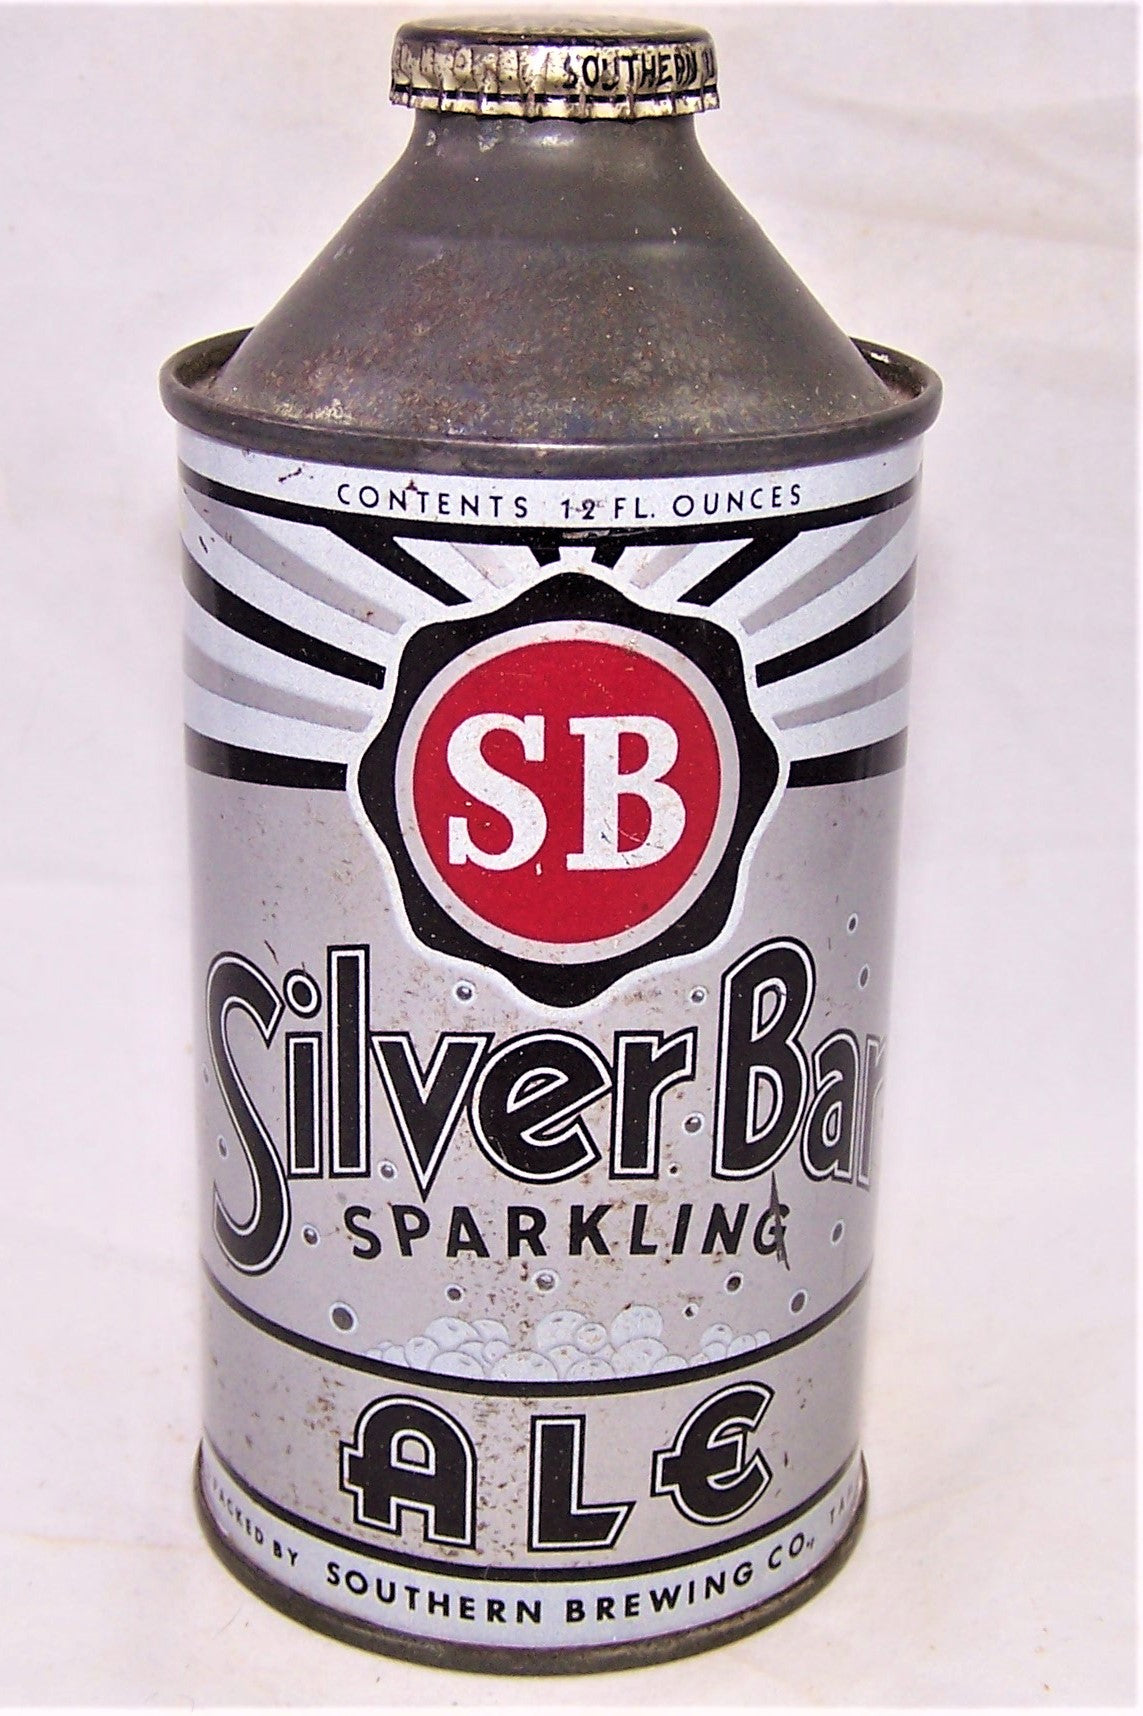 Silver Bar Sparkling Ale, USBC 183-03, Grade 1 Sold 6/8/19